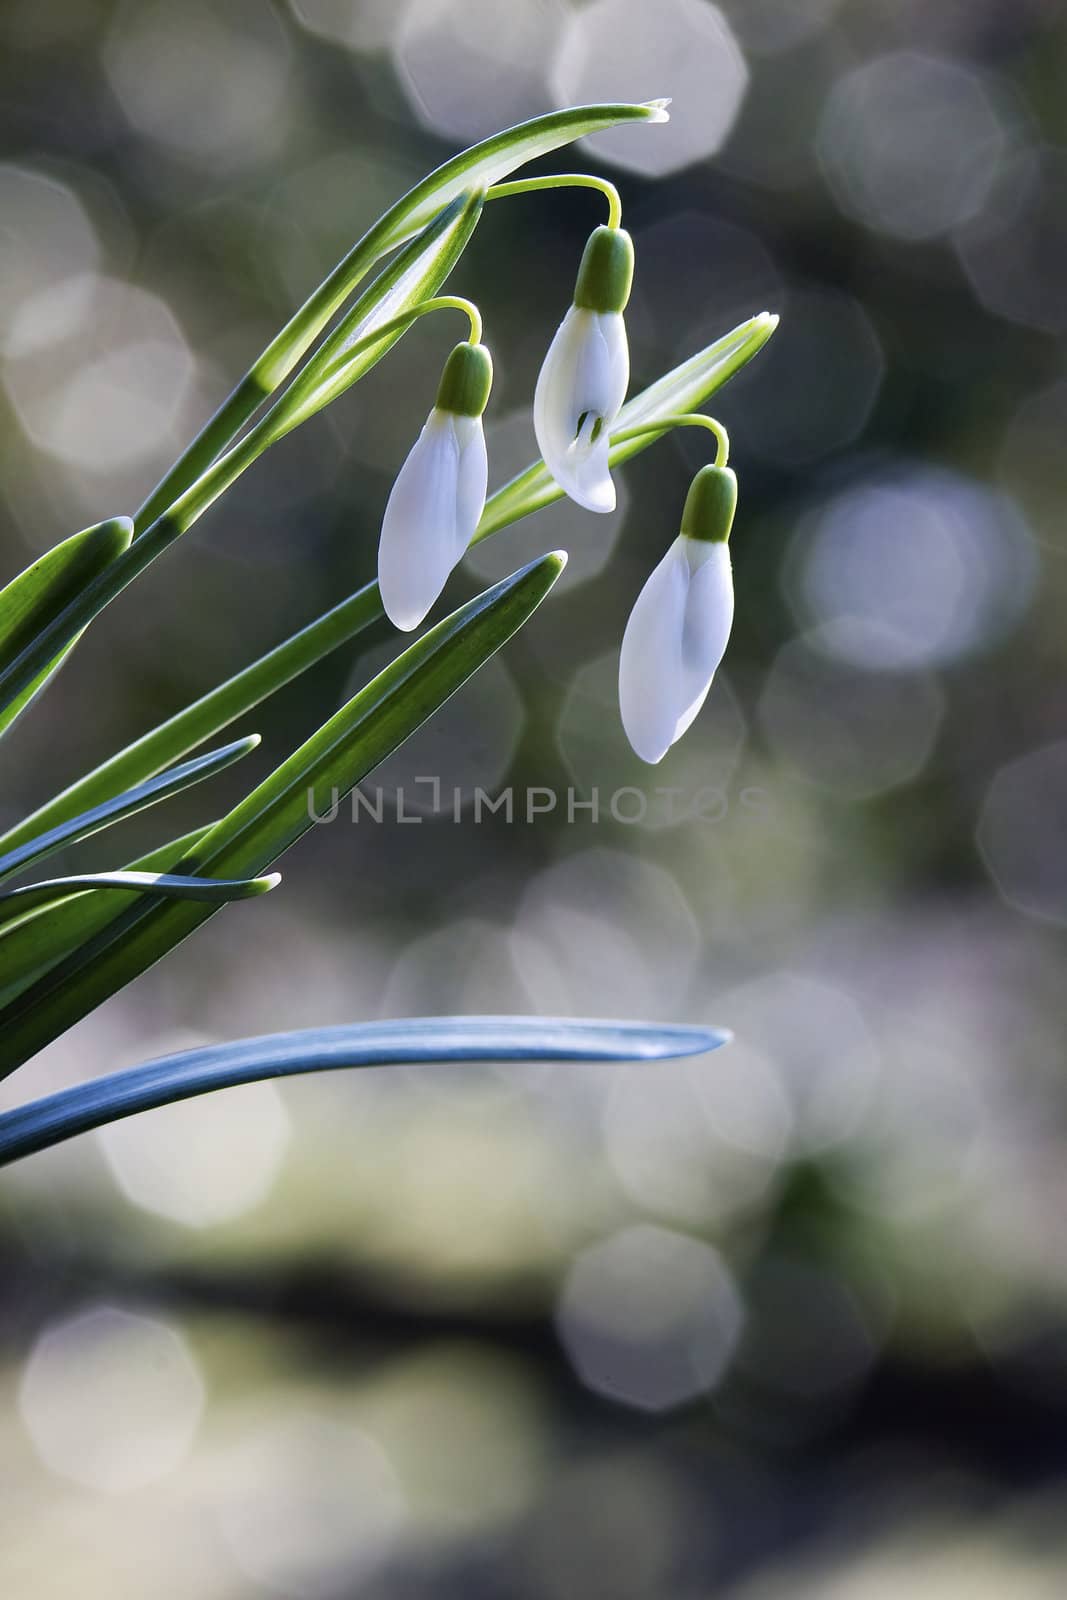 snowdrops - symbol of spring by miradrozdowski